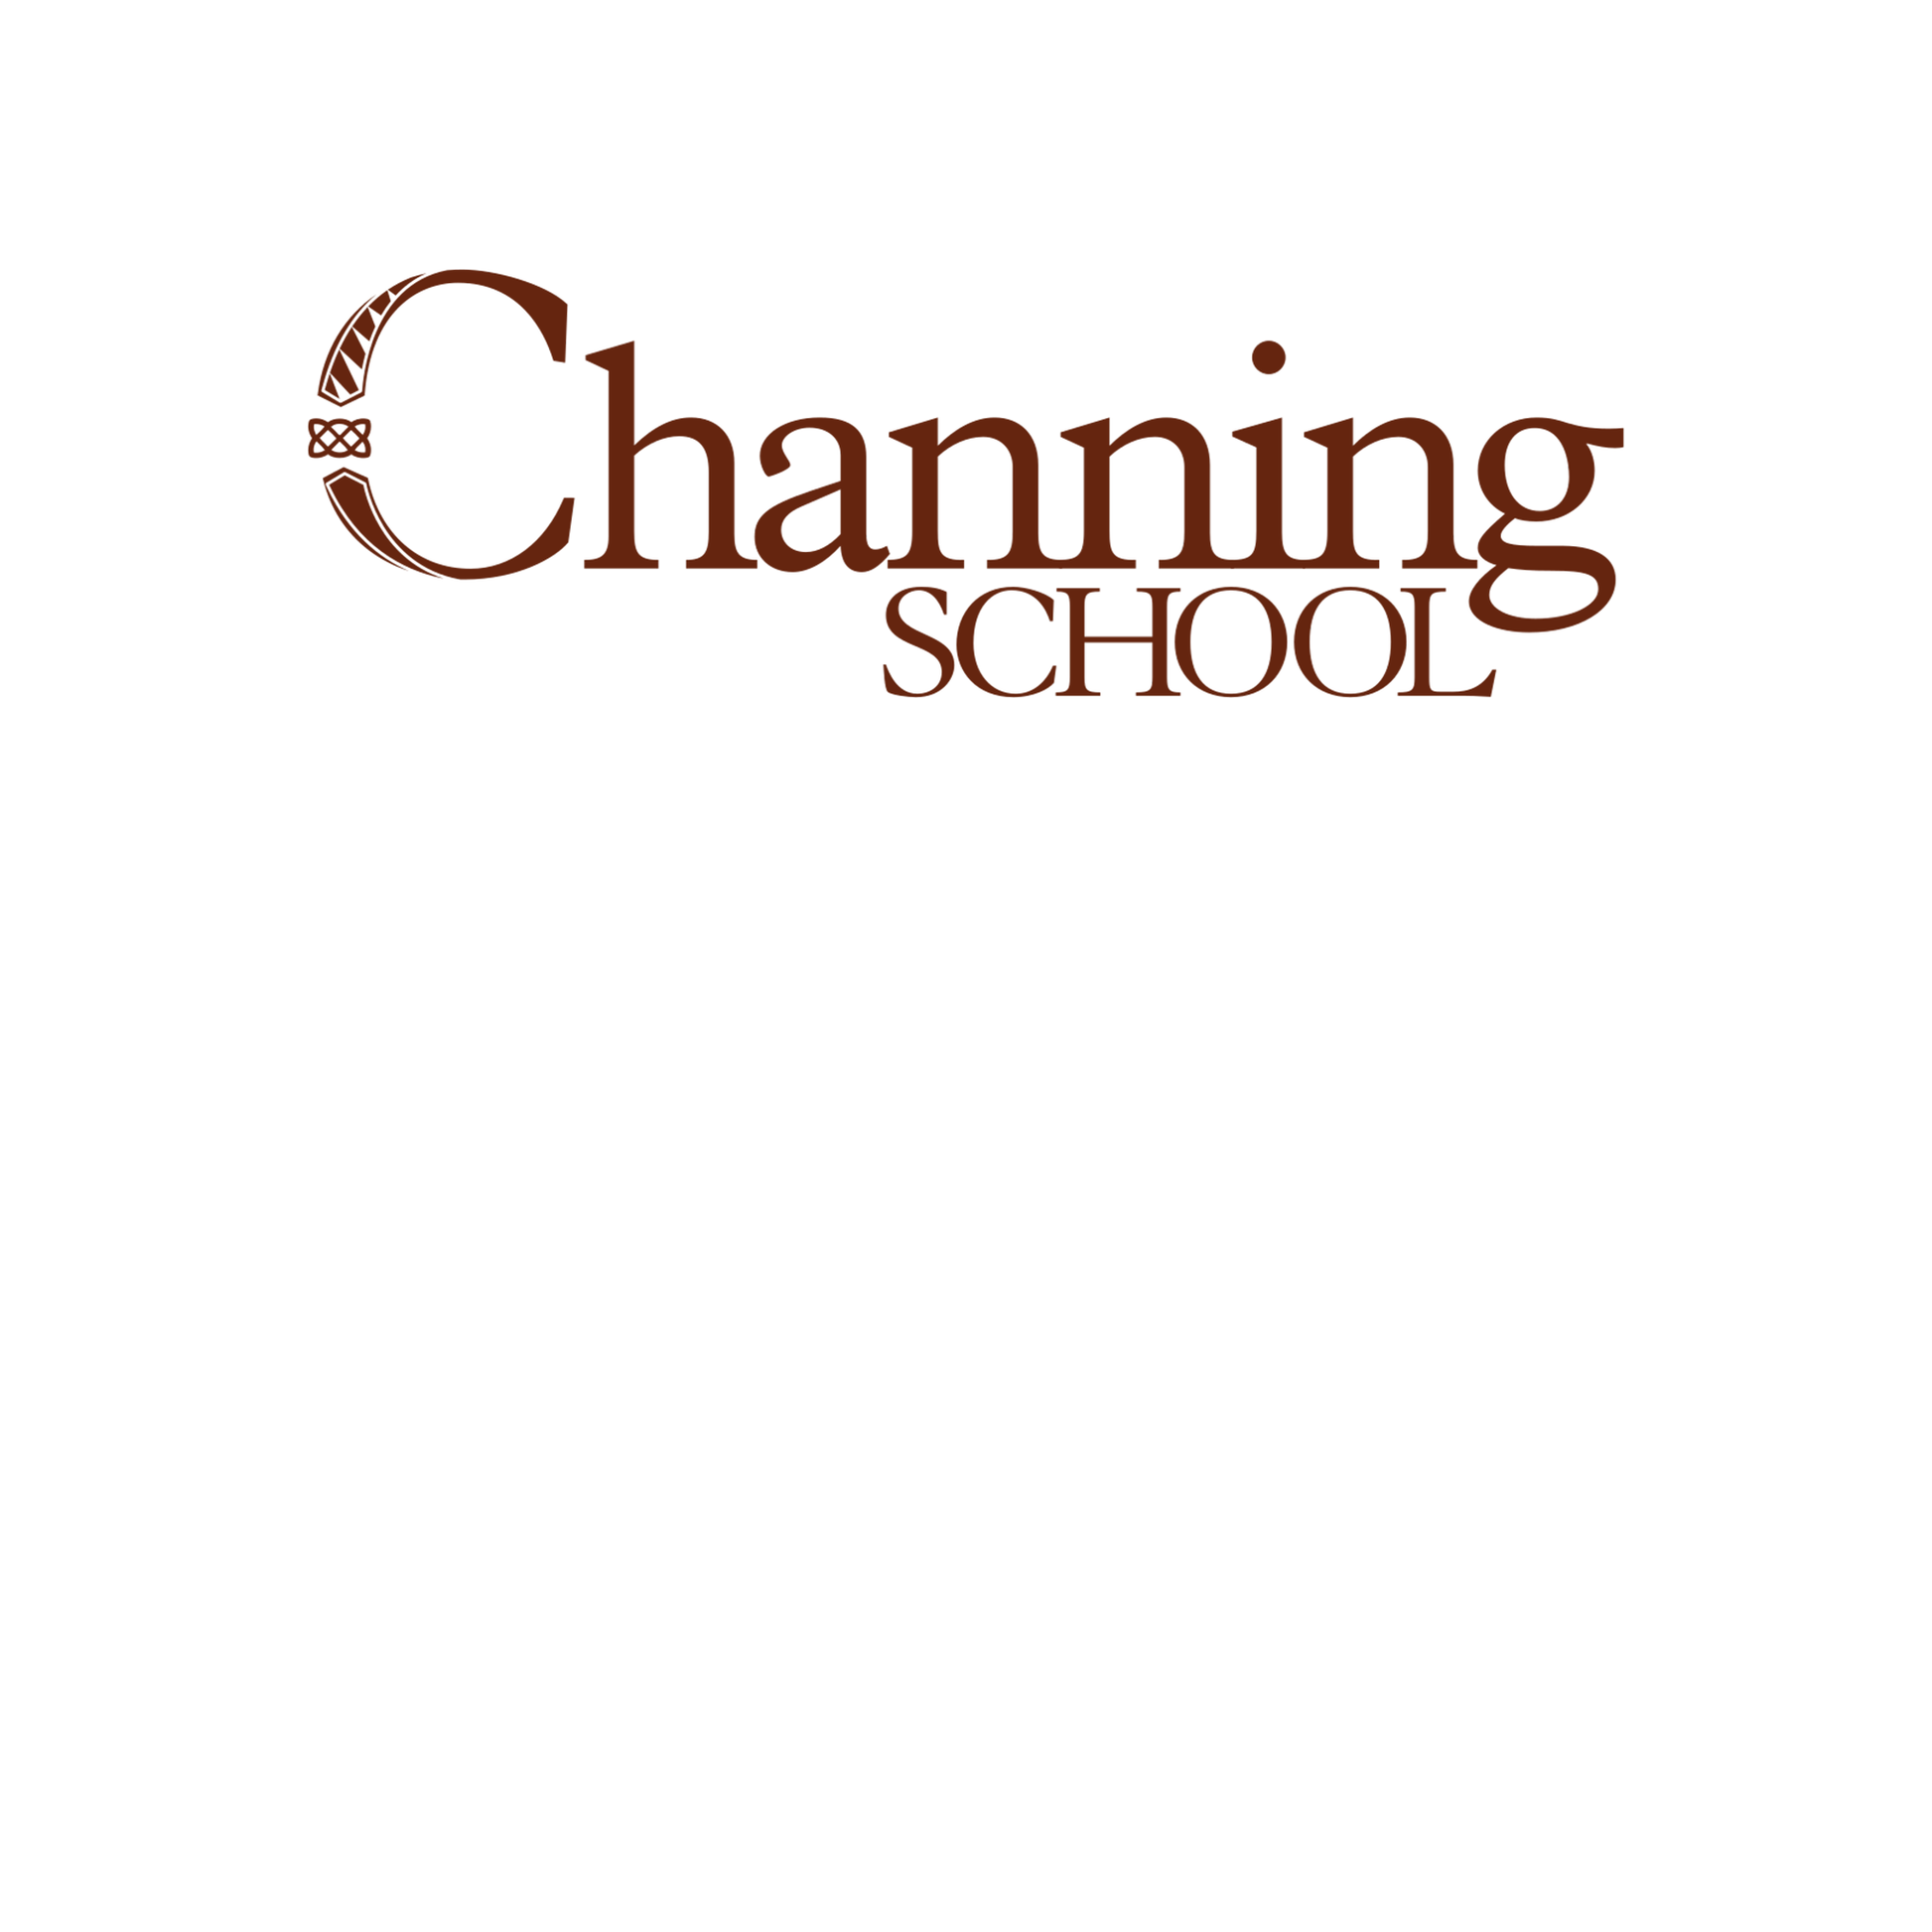 Channing School: 11+ English (2012) [Version: Group 1]